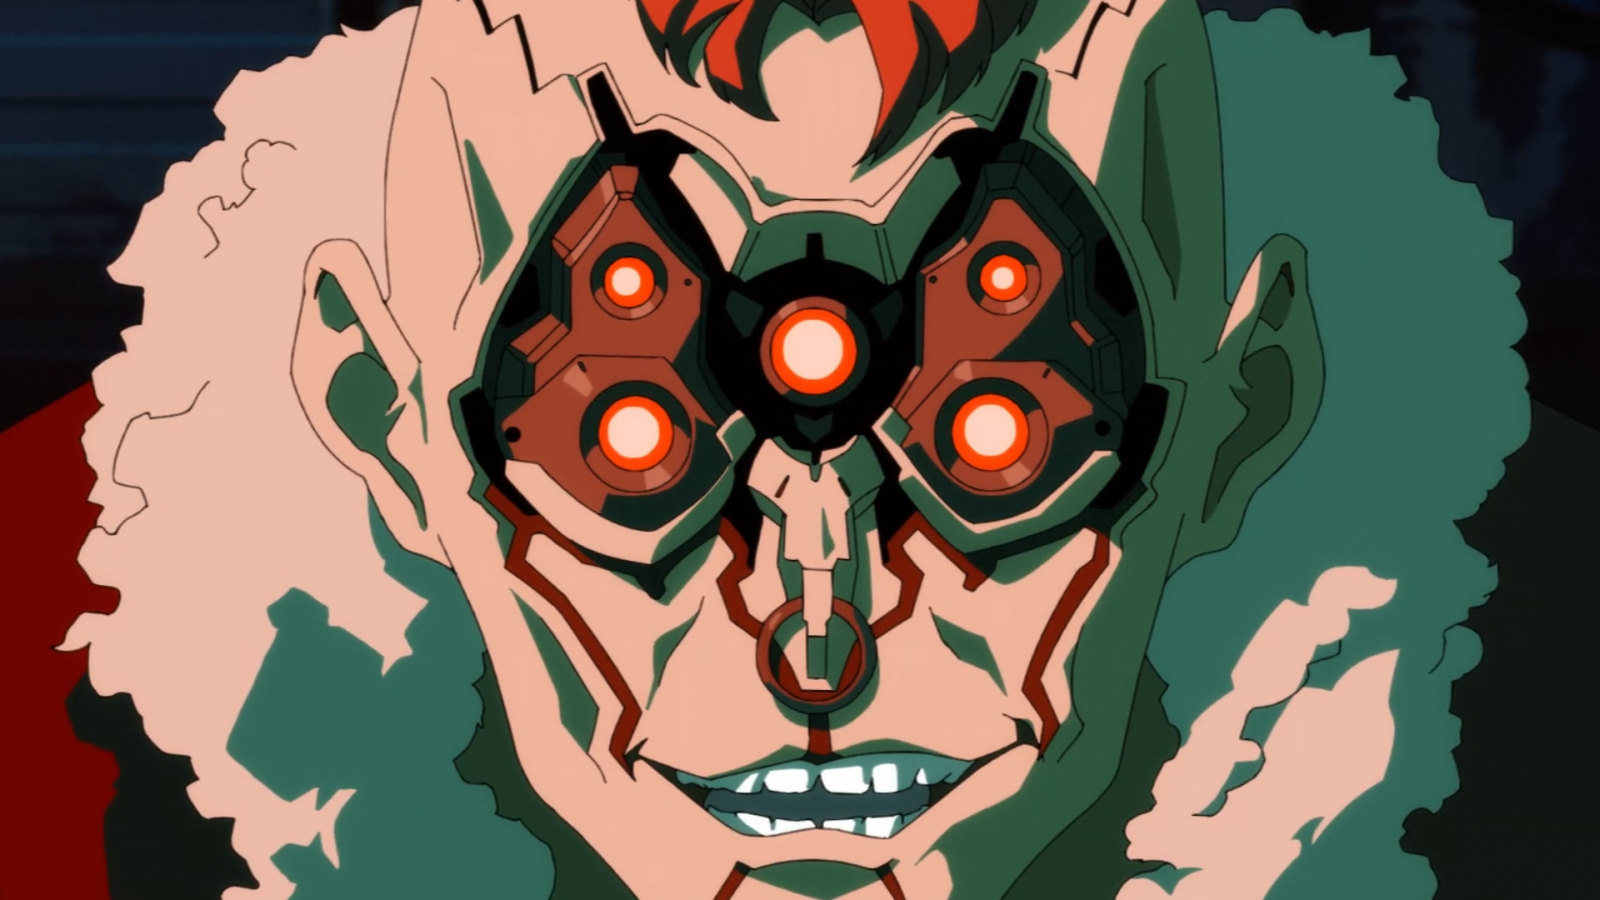 Cyberpunk Edgerunners a Vibrant Ode to Retro Anime  Animation World  Network